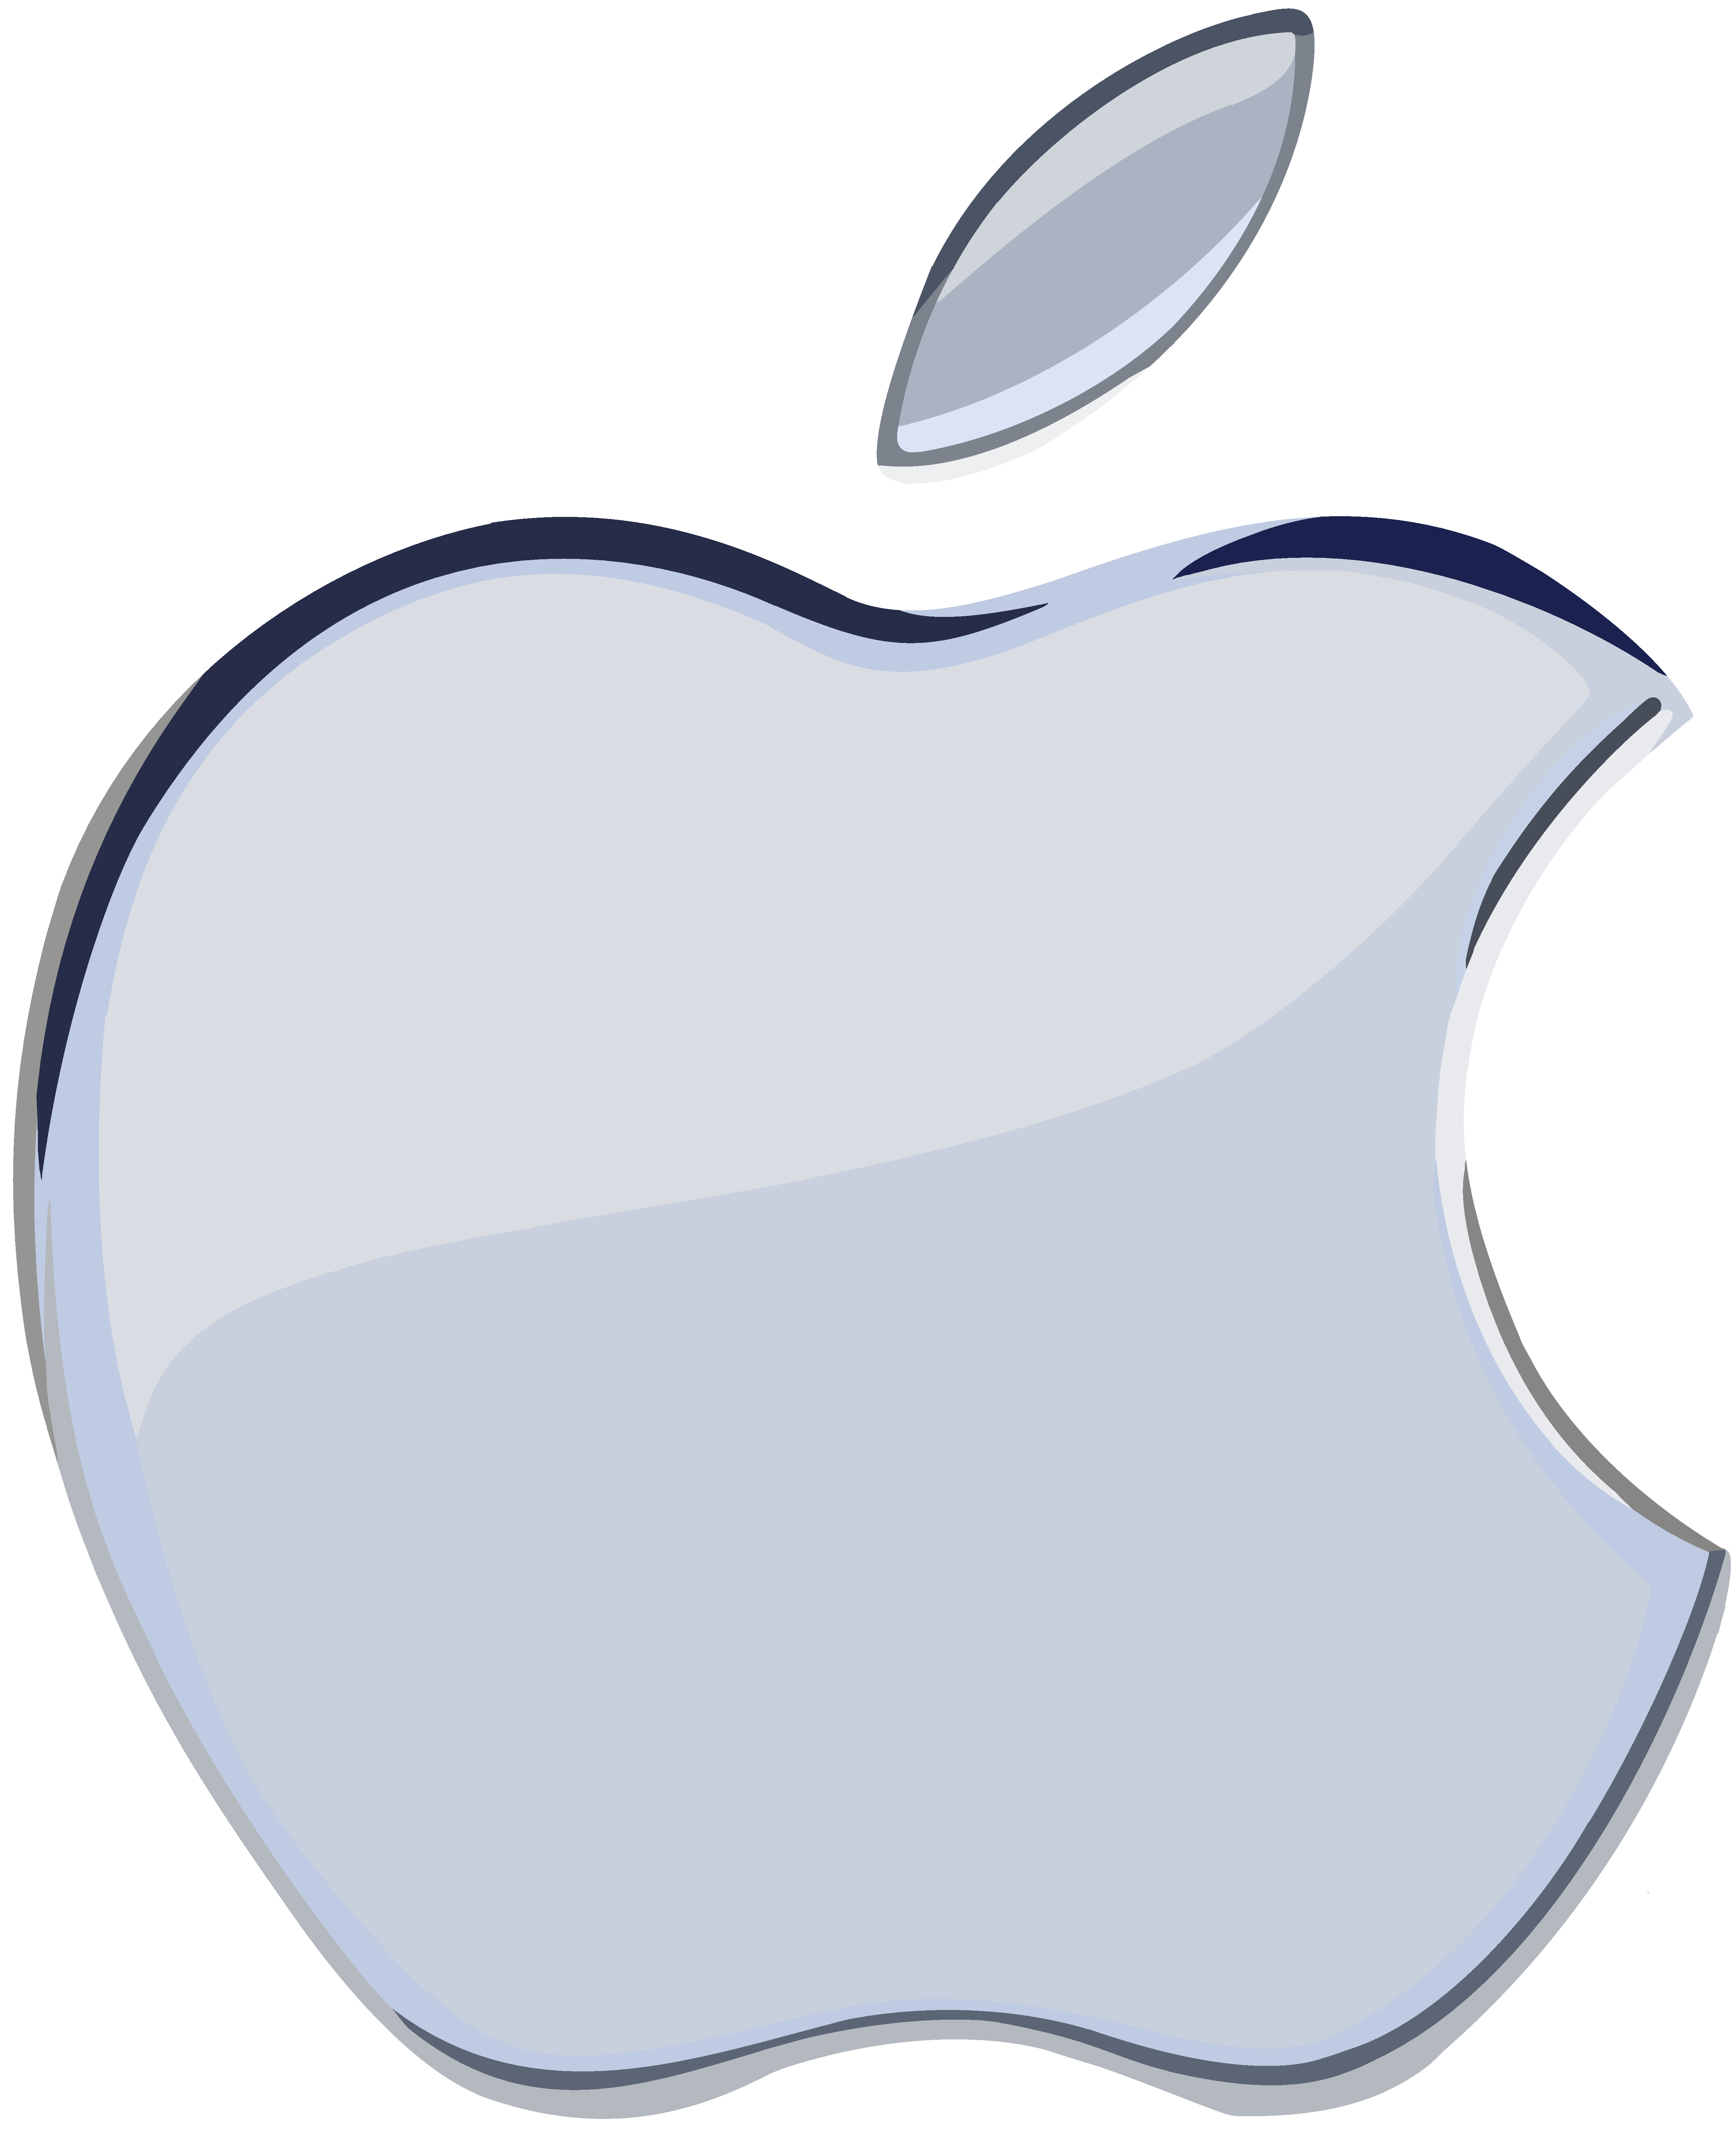 Silver Apple Logo 1 flat by WindyThePlaneh on DeviantArt